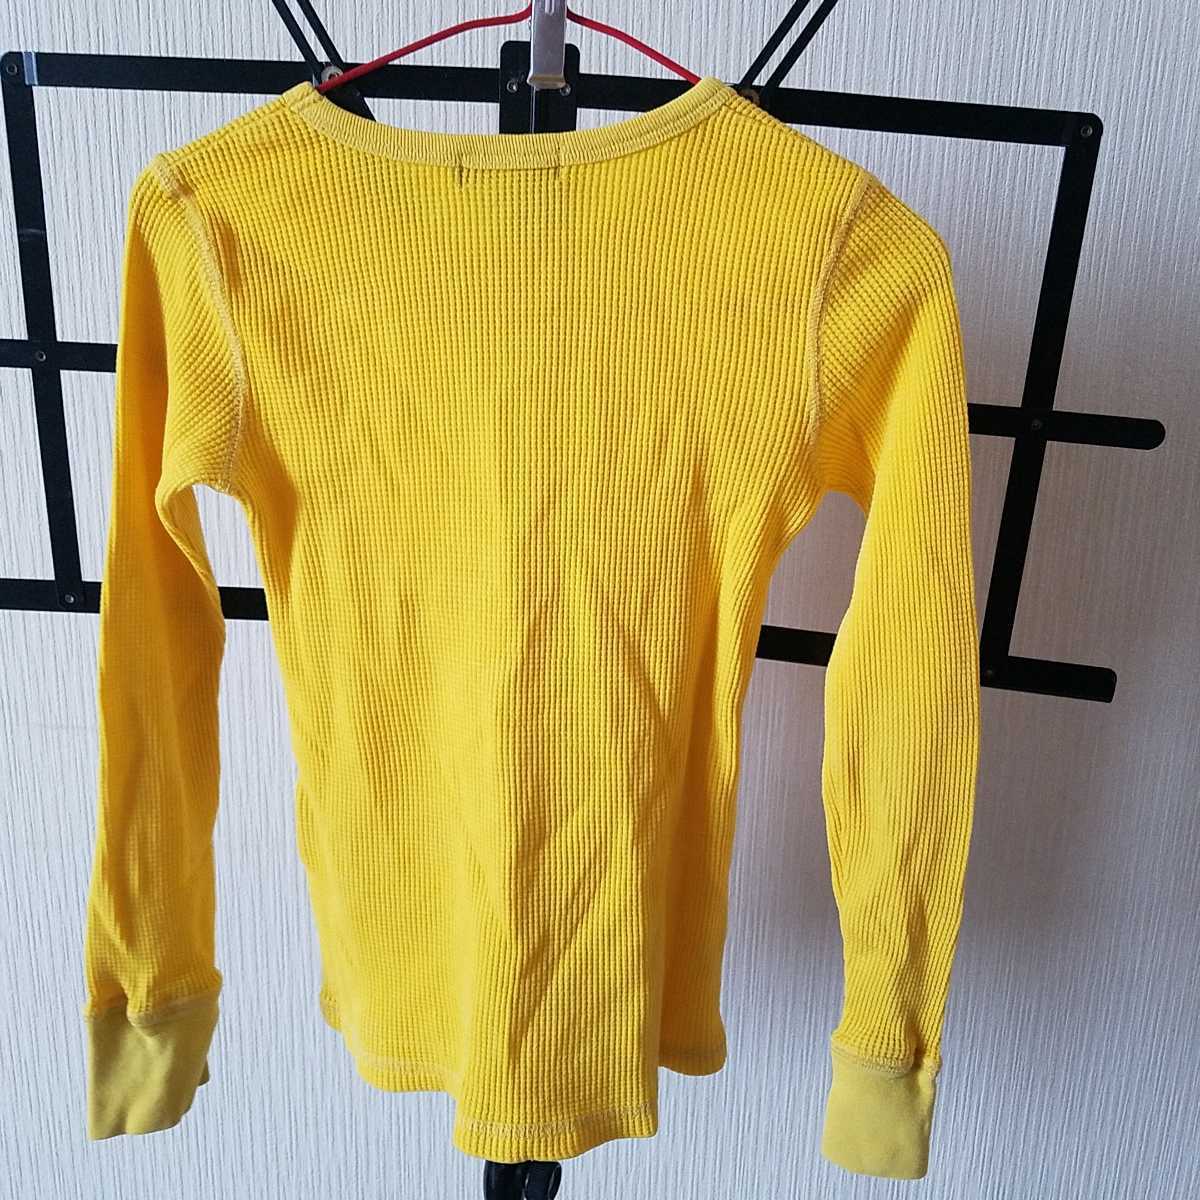  б/у * Chubbygang футболка ( желтый )/ размер 110